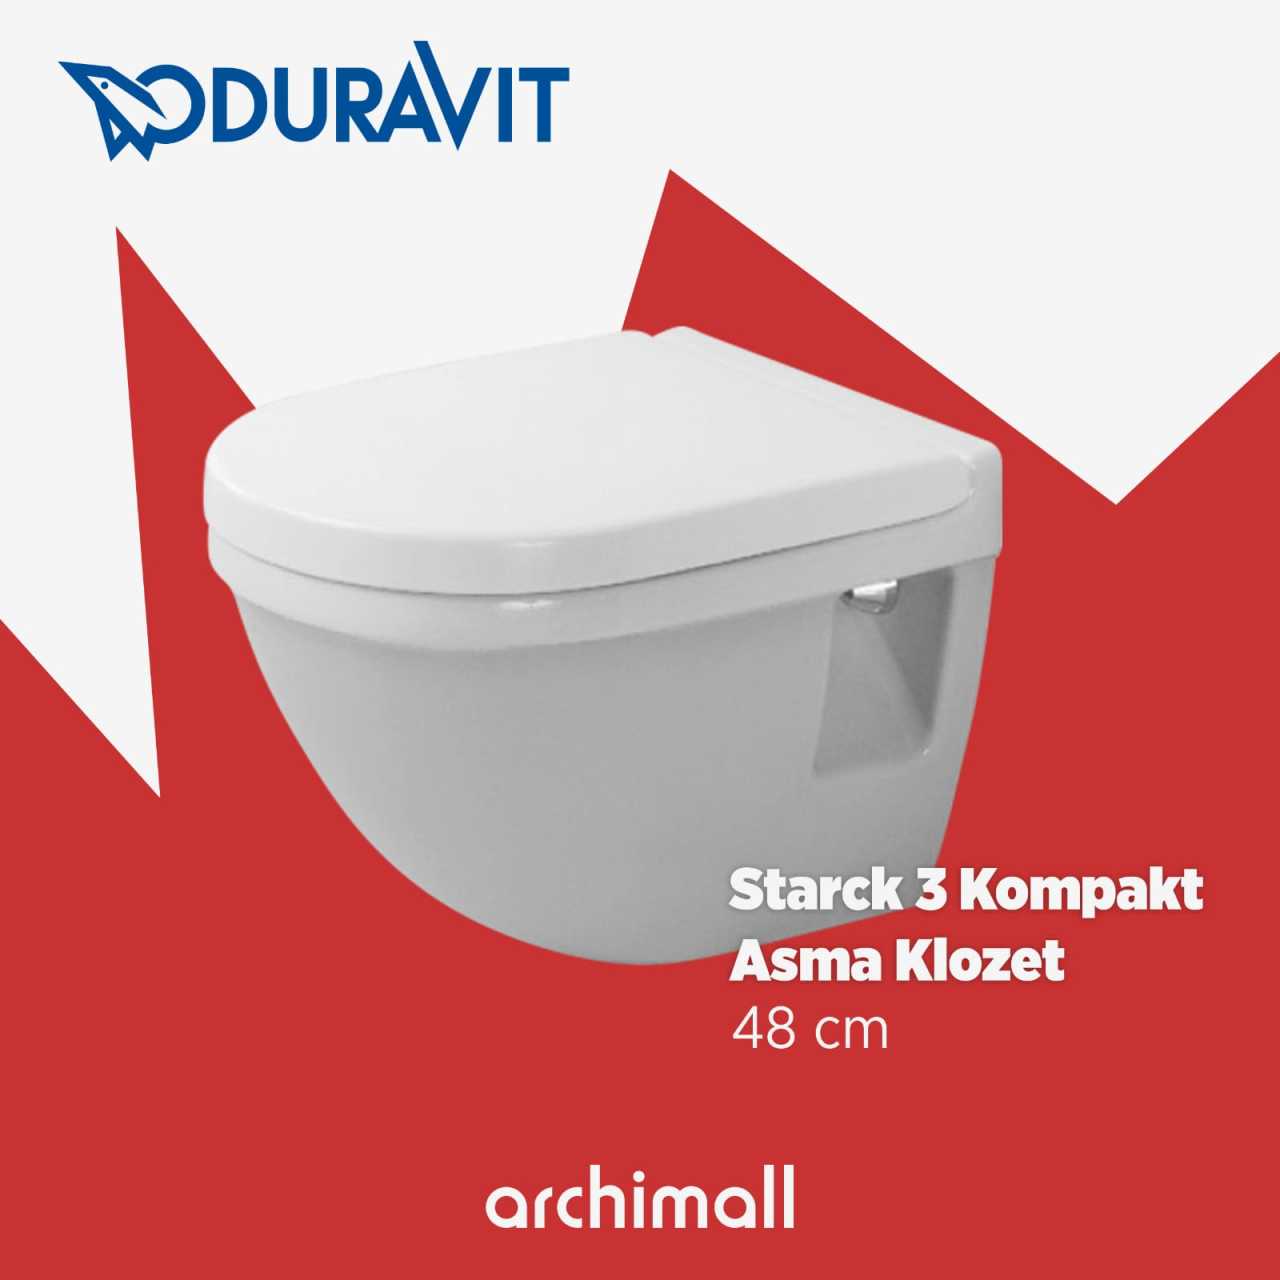 Duravit Starck 3 Kompakt Asma Klozet 48 cm 220239